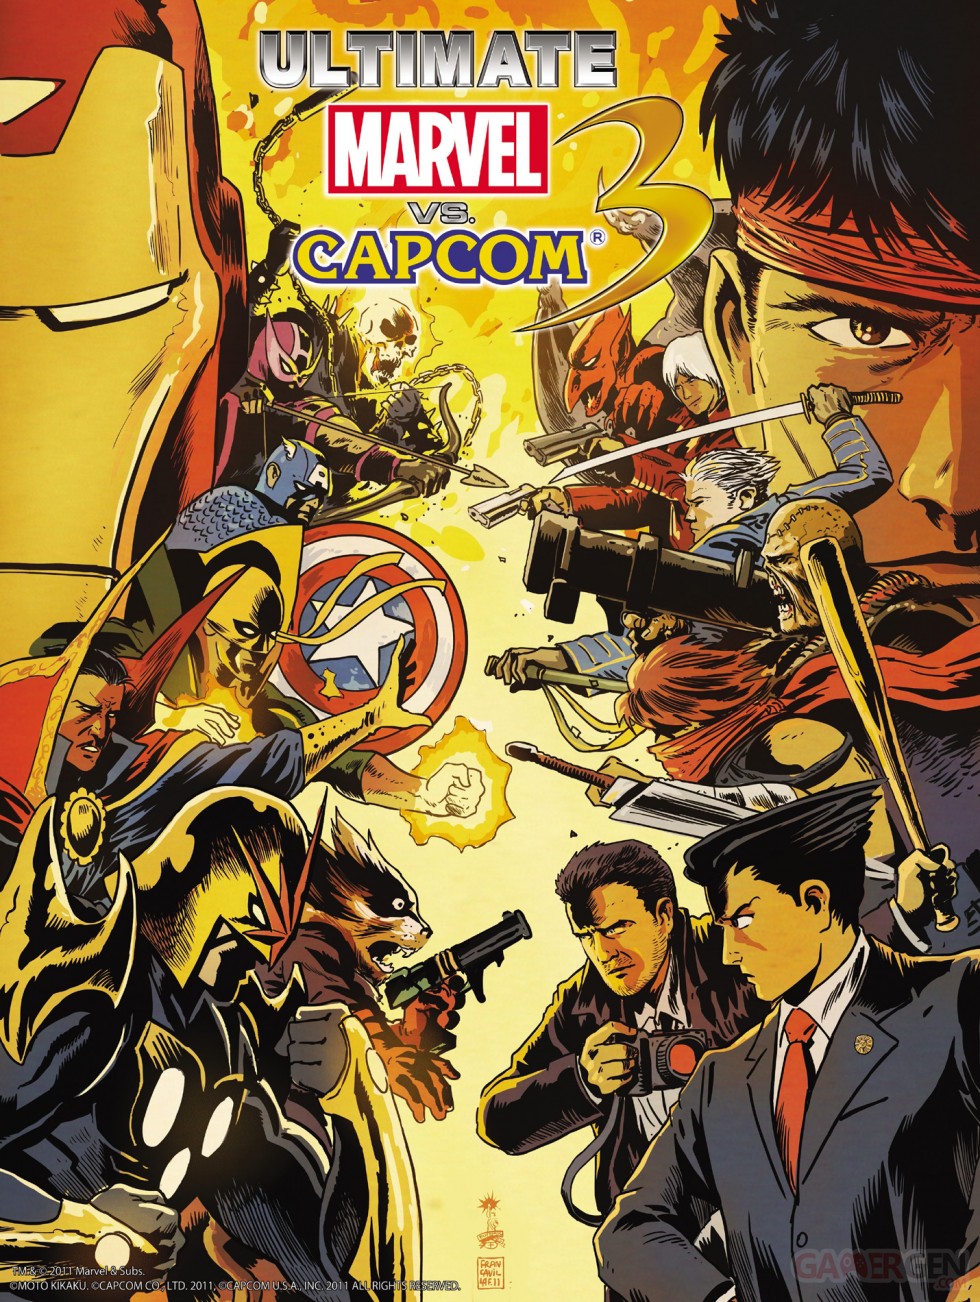 Ultimate-Marvel-vs-Capcom-3_31-10-2011_art-1